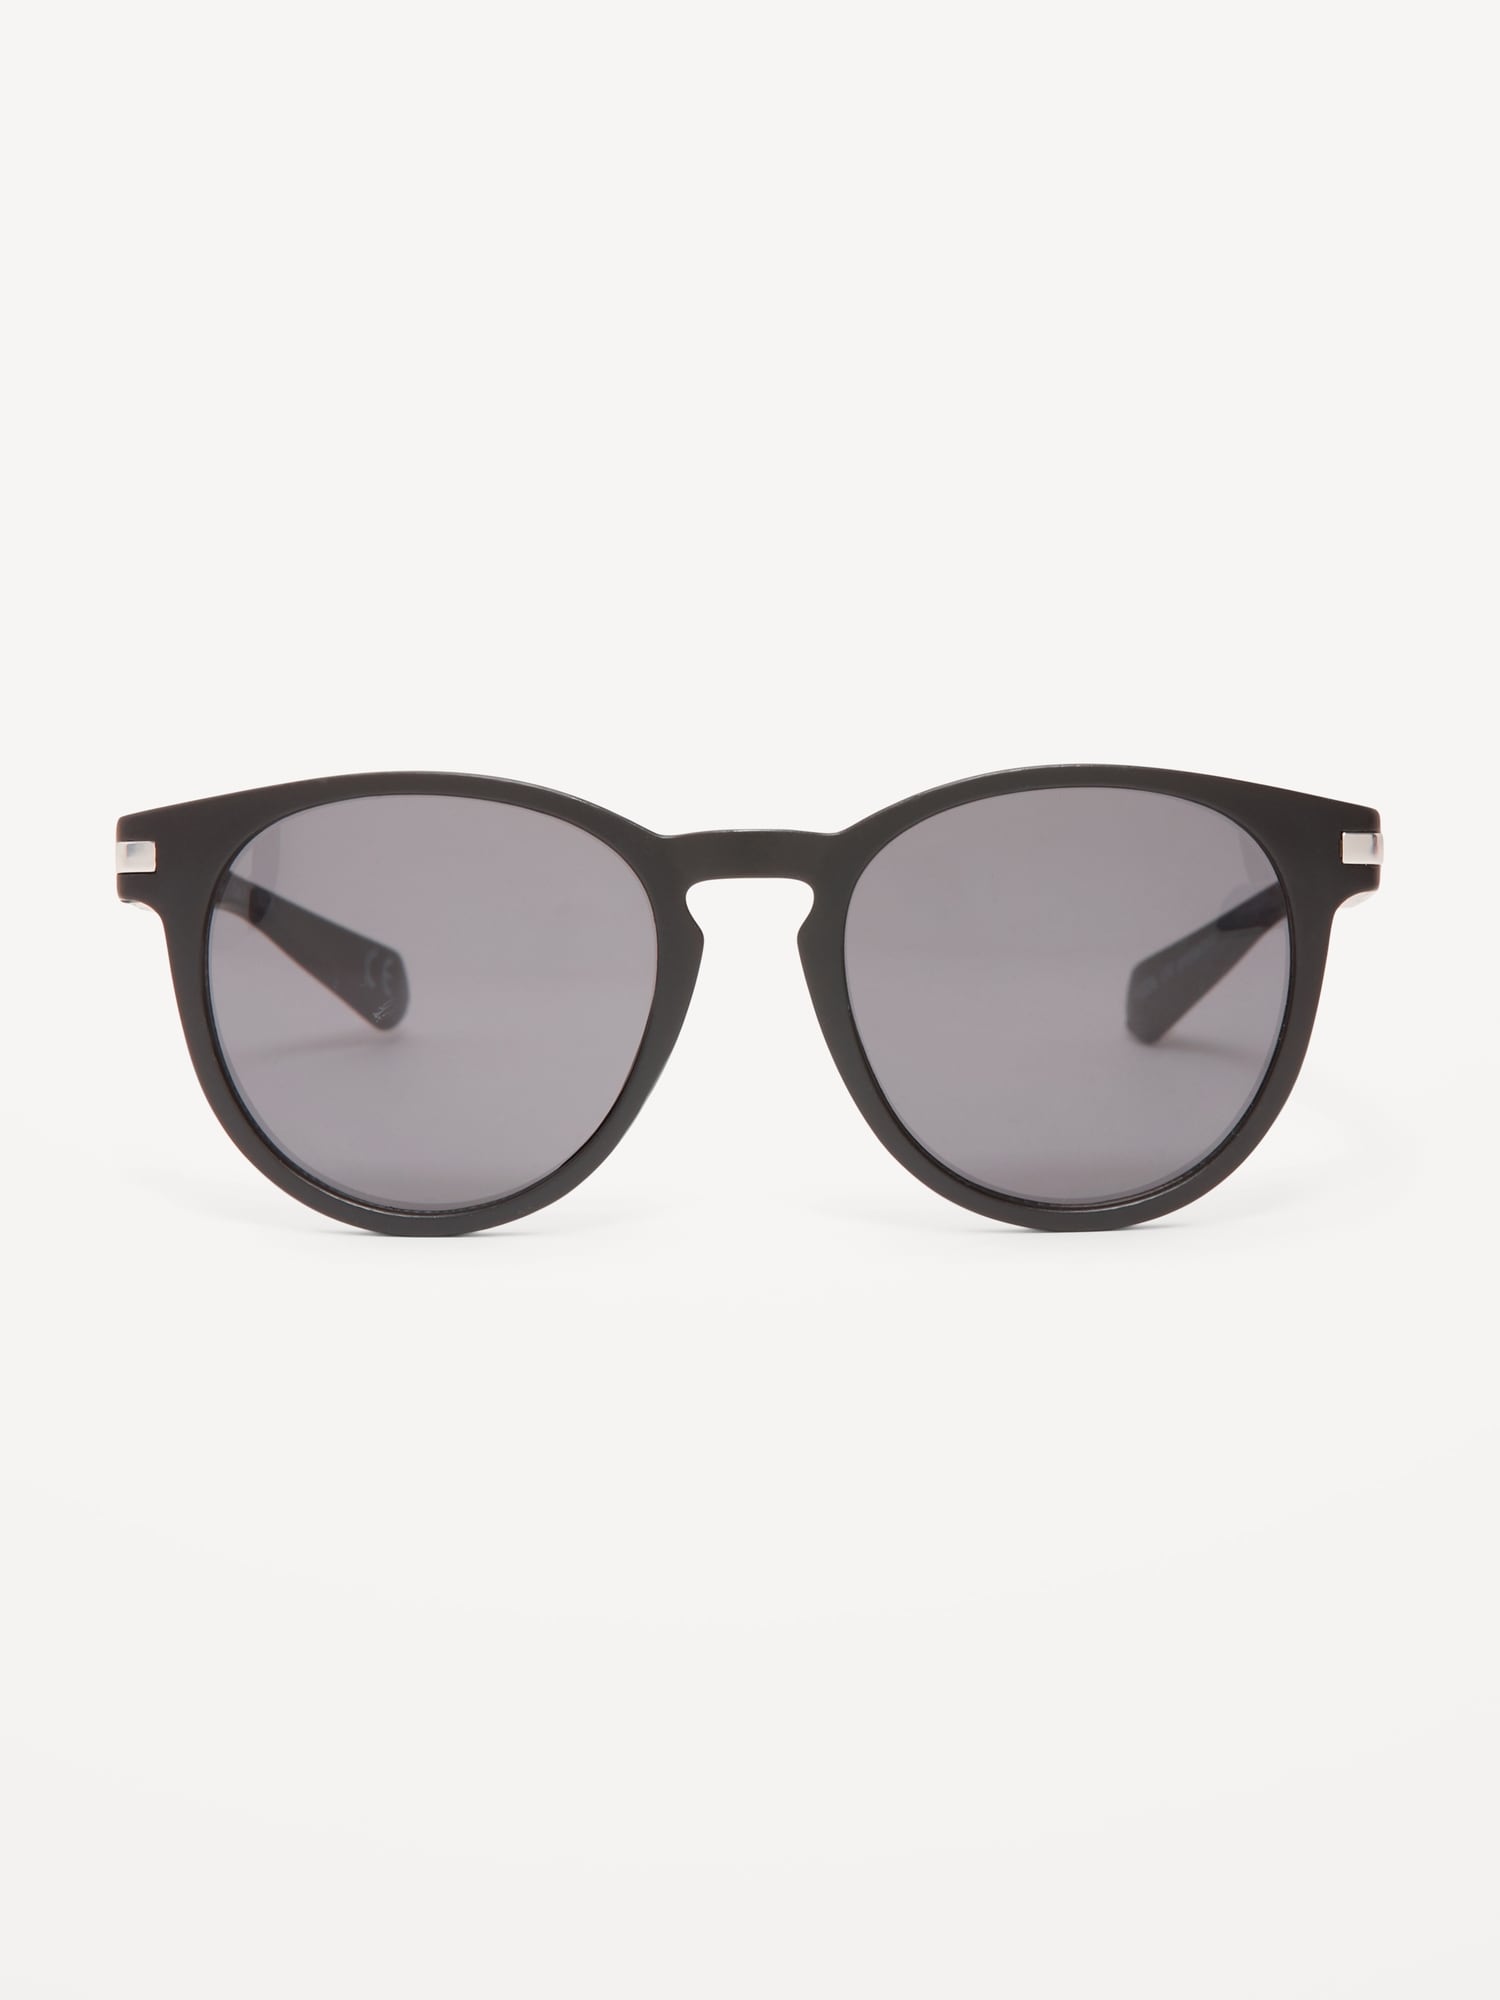 Old Navy Round Sunglasses black - 607199002